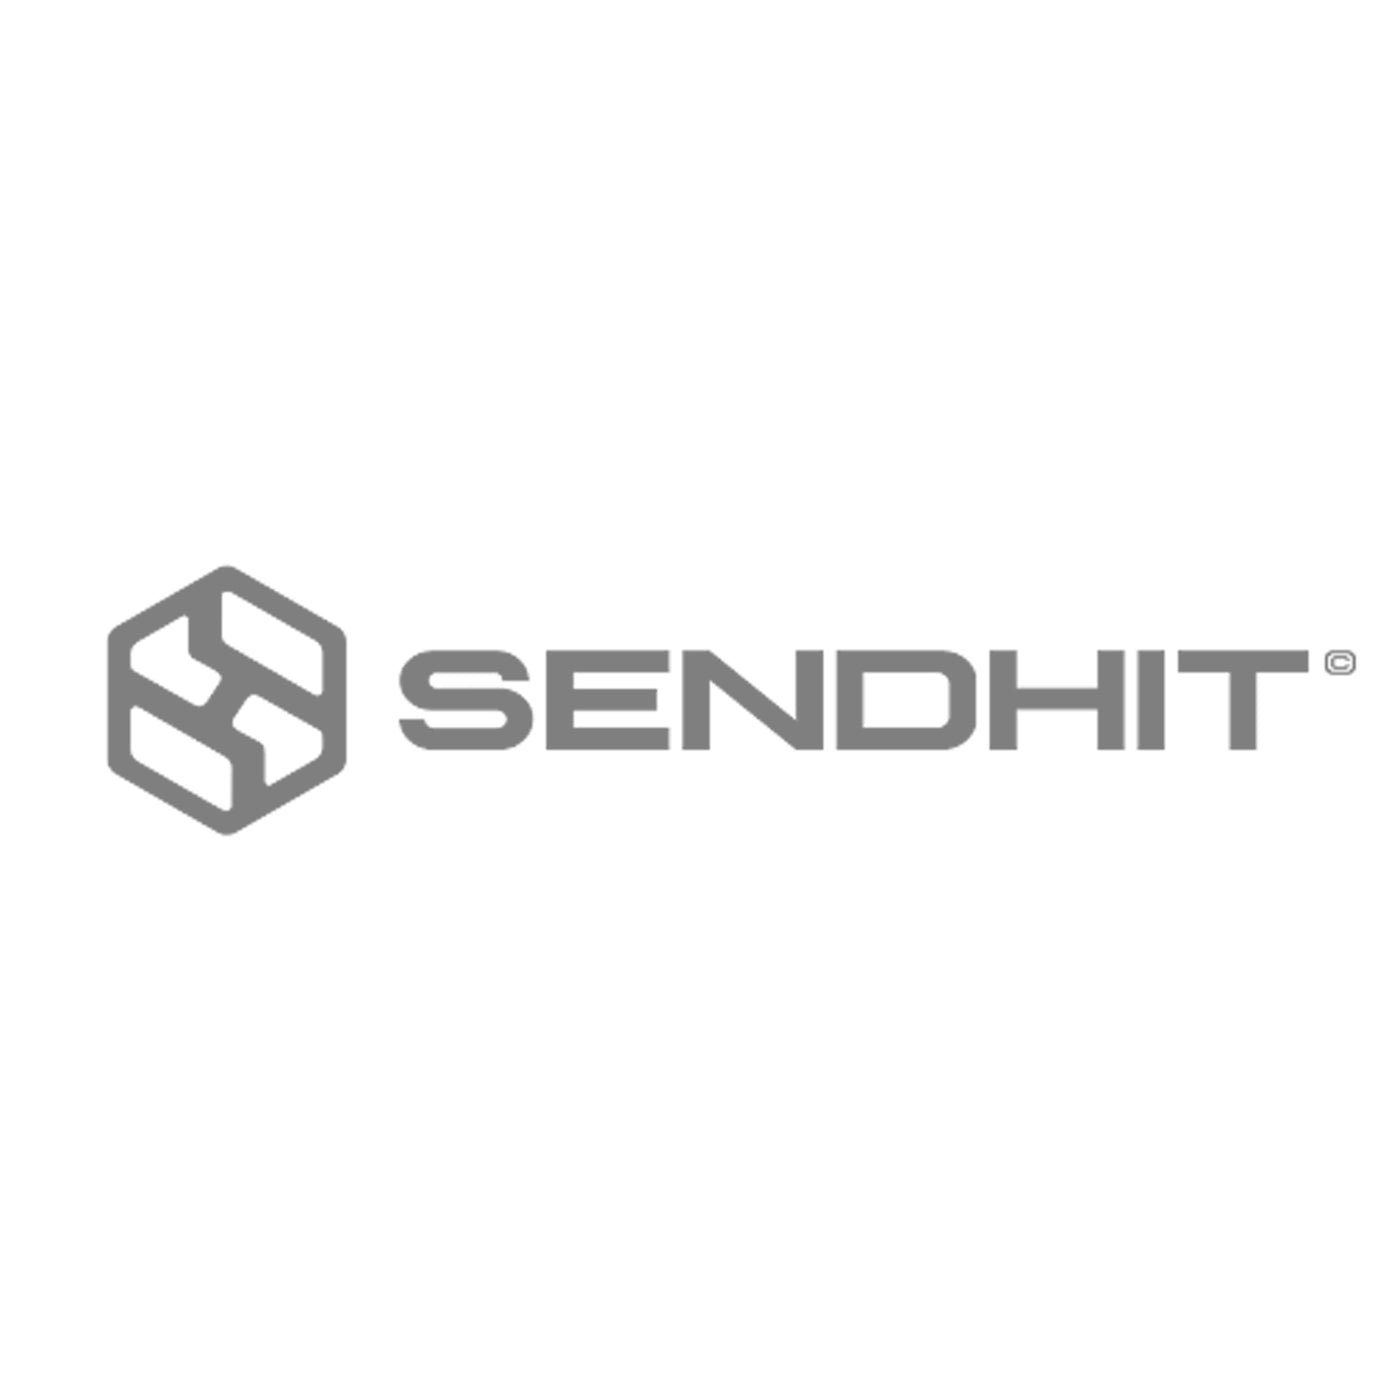 SendHit Scratch Cover Fork / Shock / Seatpost stanchion Repair Kit